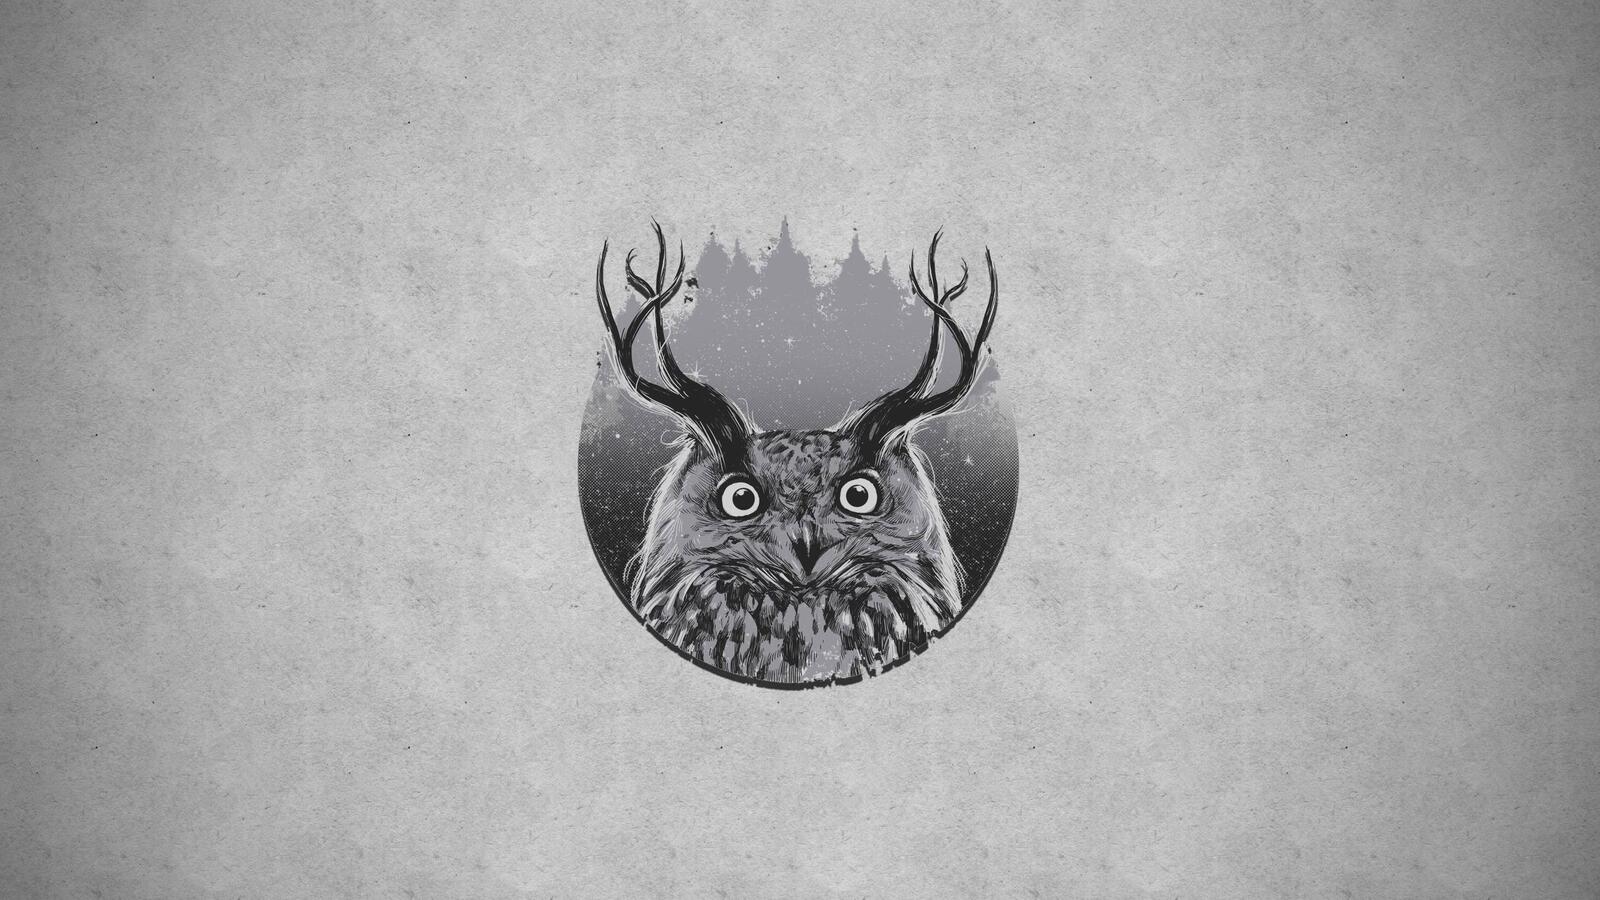 Wallpapers wallpaper owl minimalistic graphic design on the desktop